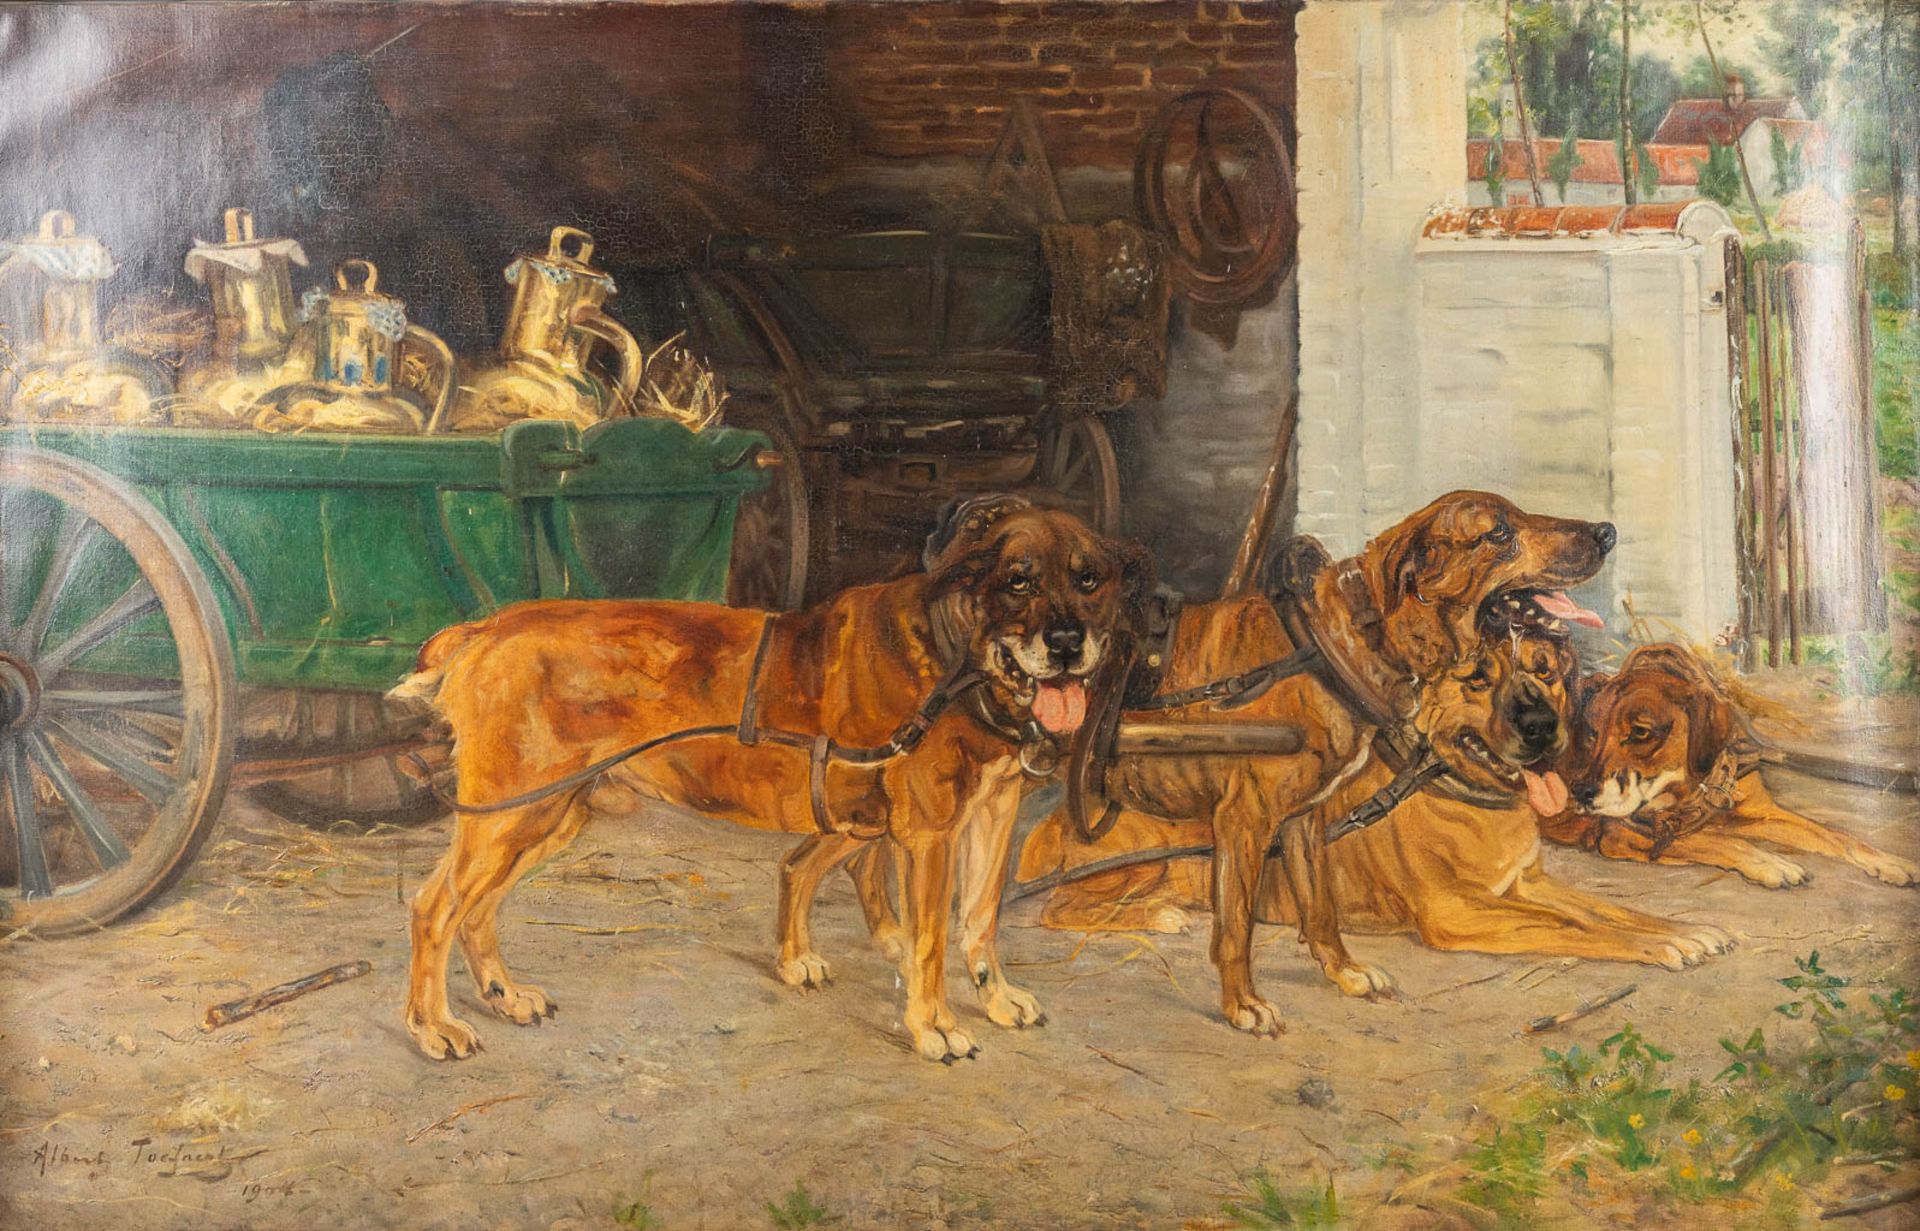 Albert TOEFAERTS (1856-1909) 'The Dog Cart' oil on canvas. (138 x 86cm)